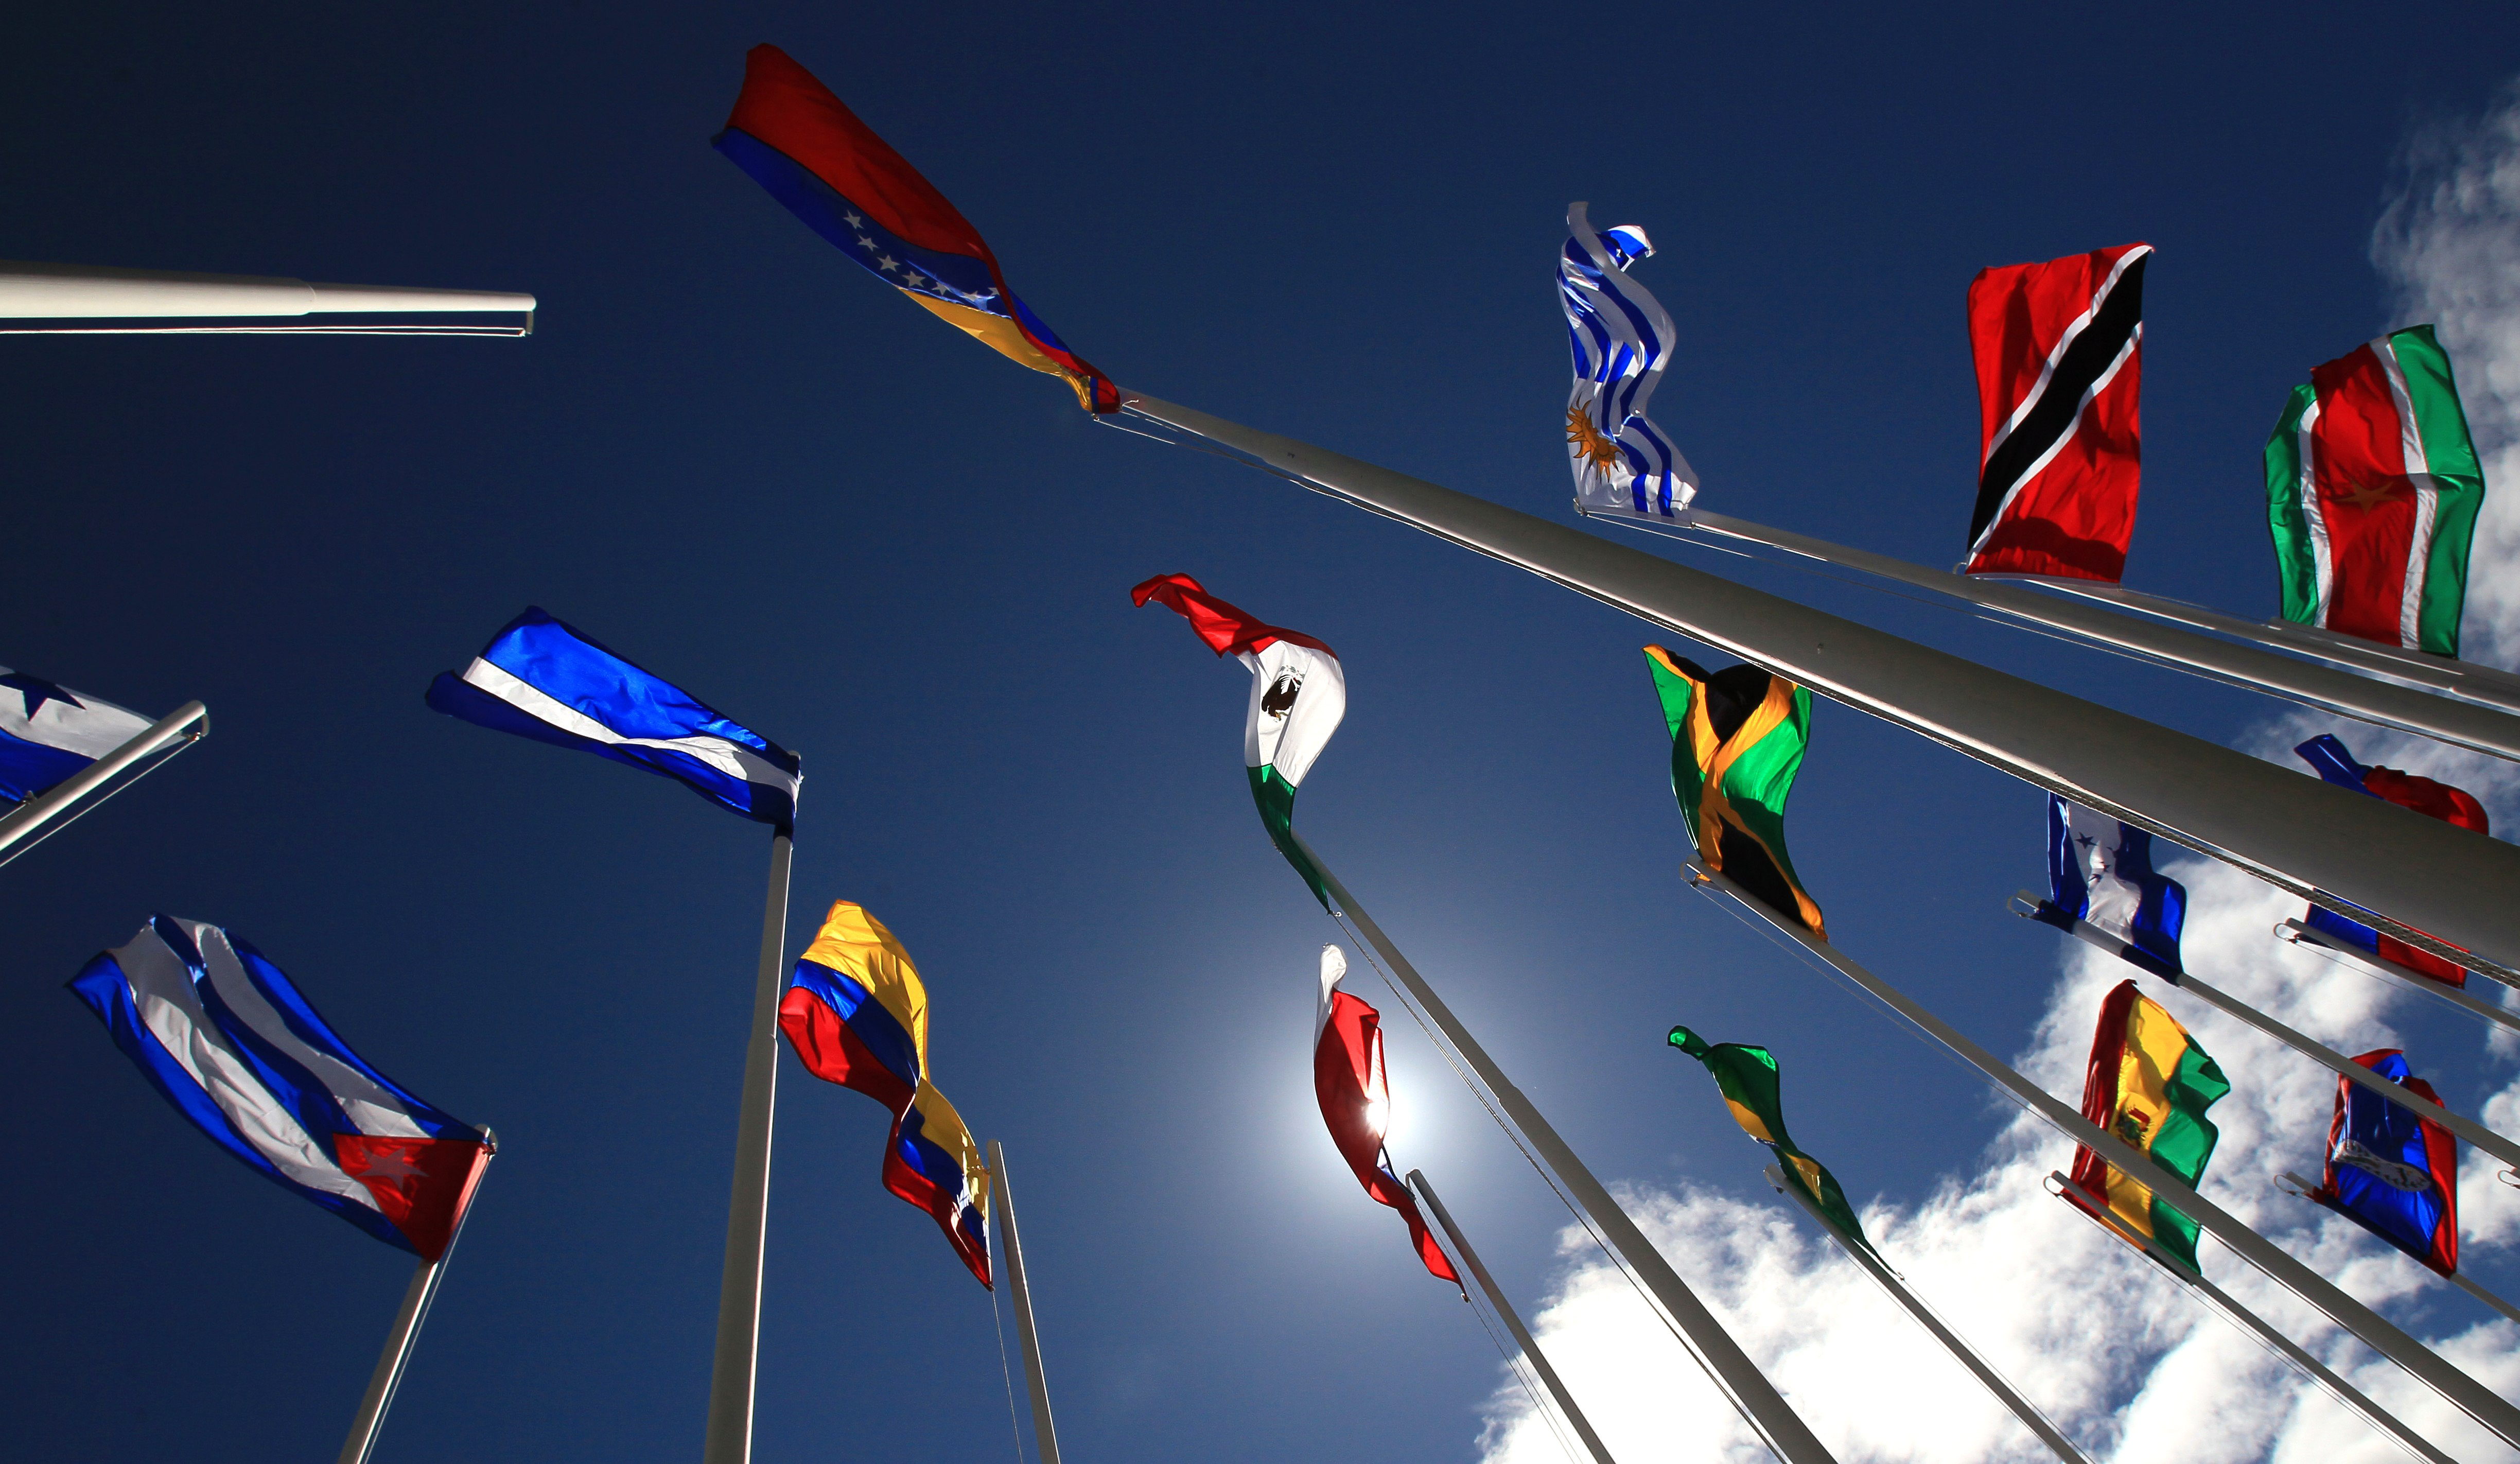 Latinoamerica busca alternativas al FMI y BM